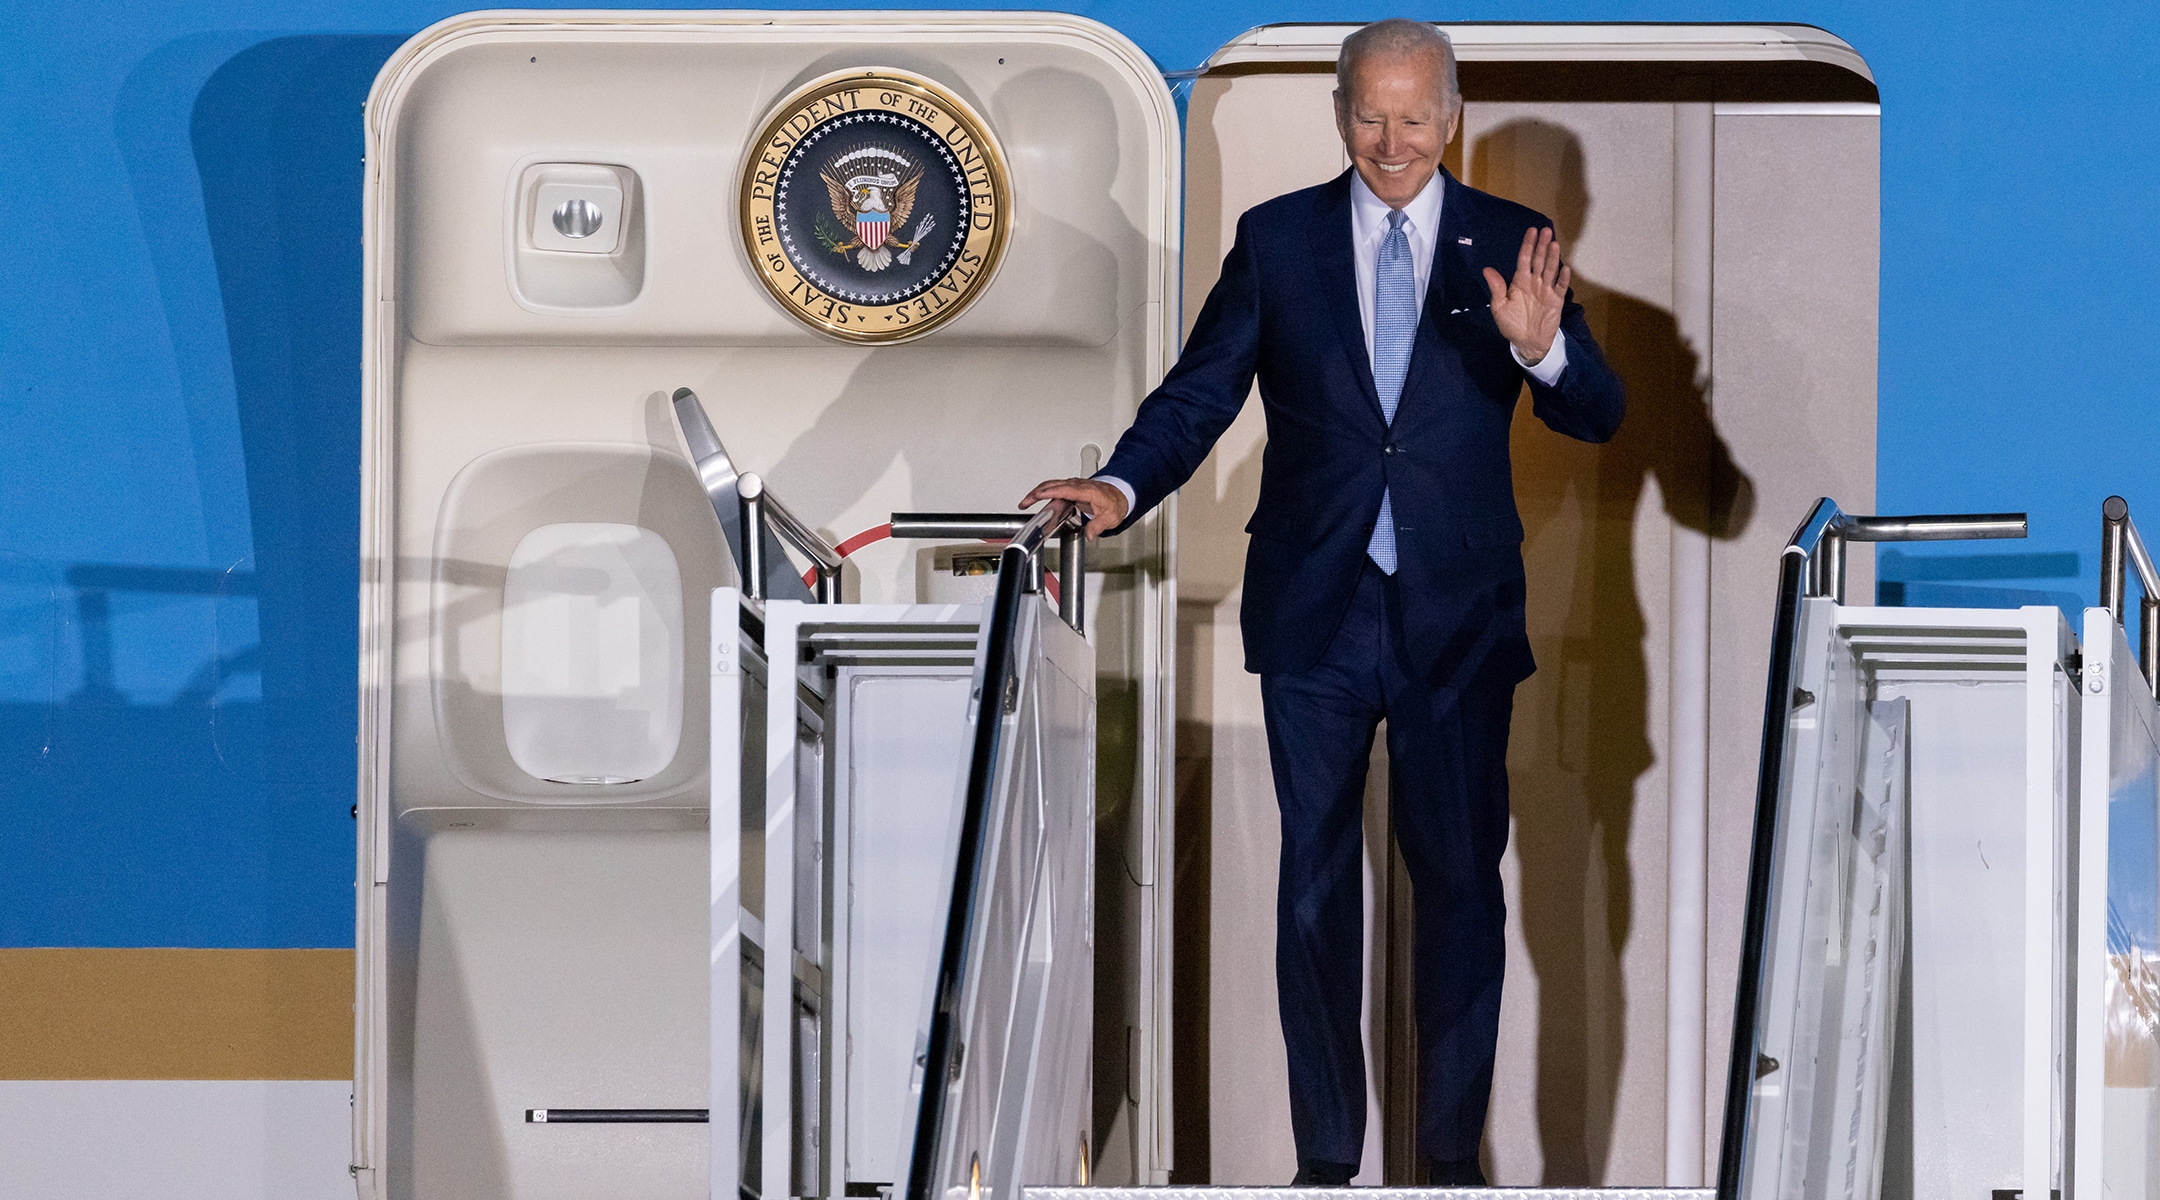 President Joe Biden steps off Air Force One upon arrival in Munich, June 25, 2022. (Daniel Karmann/picture alliance via Getty Images)